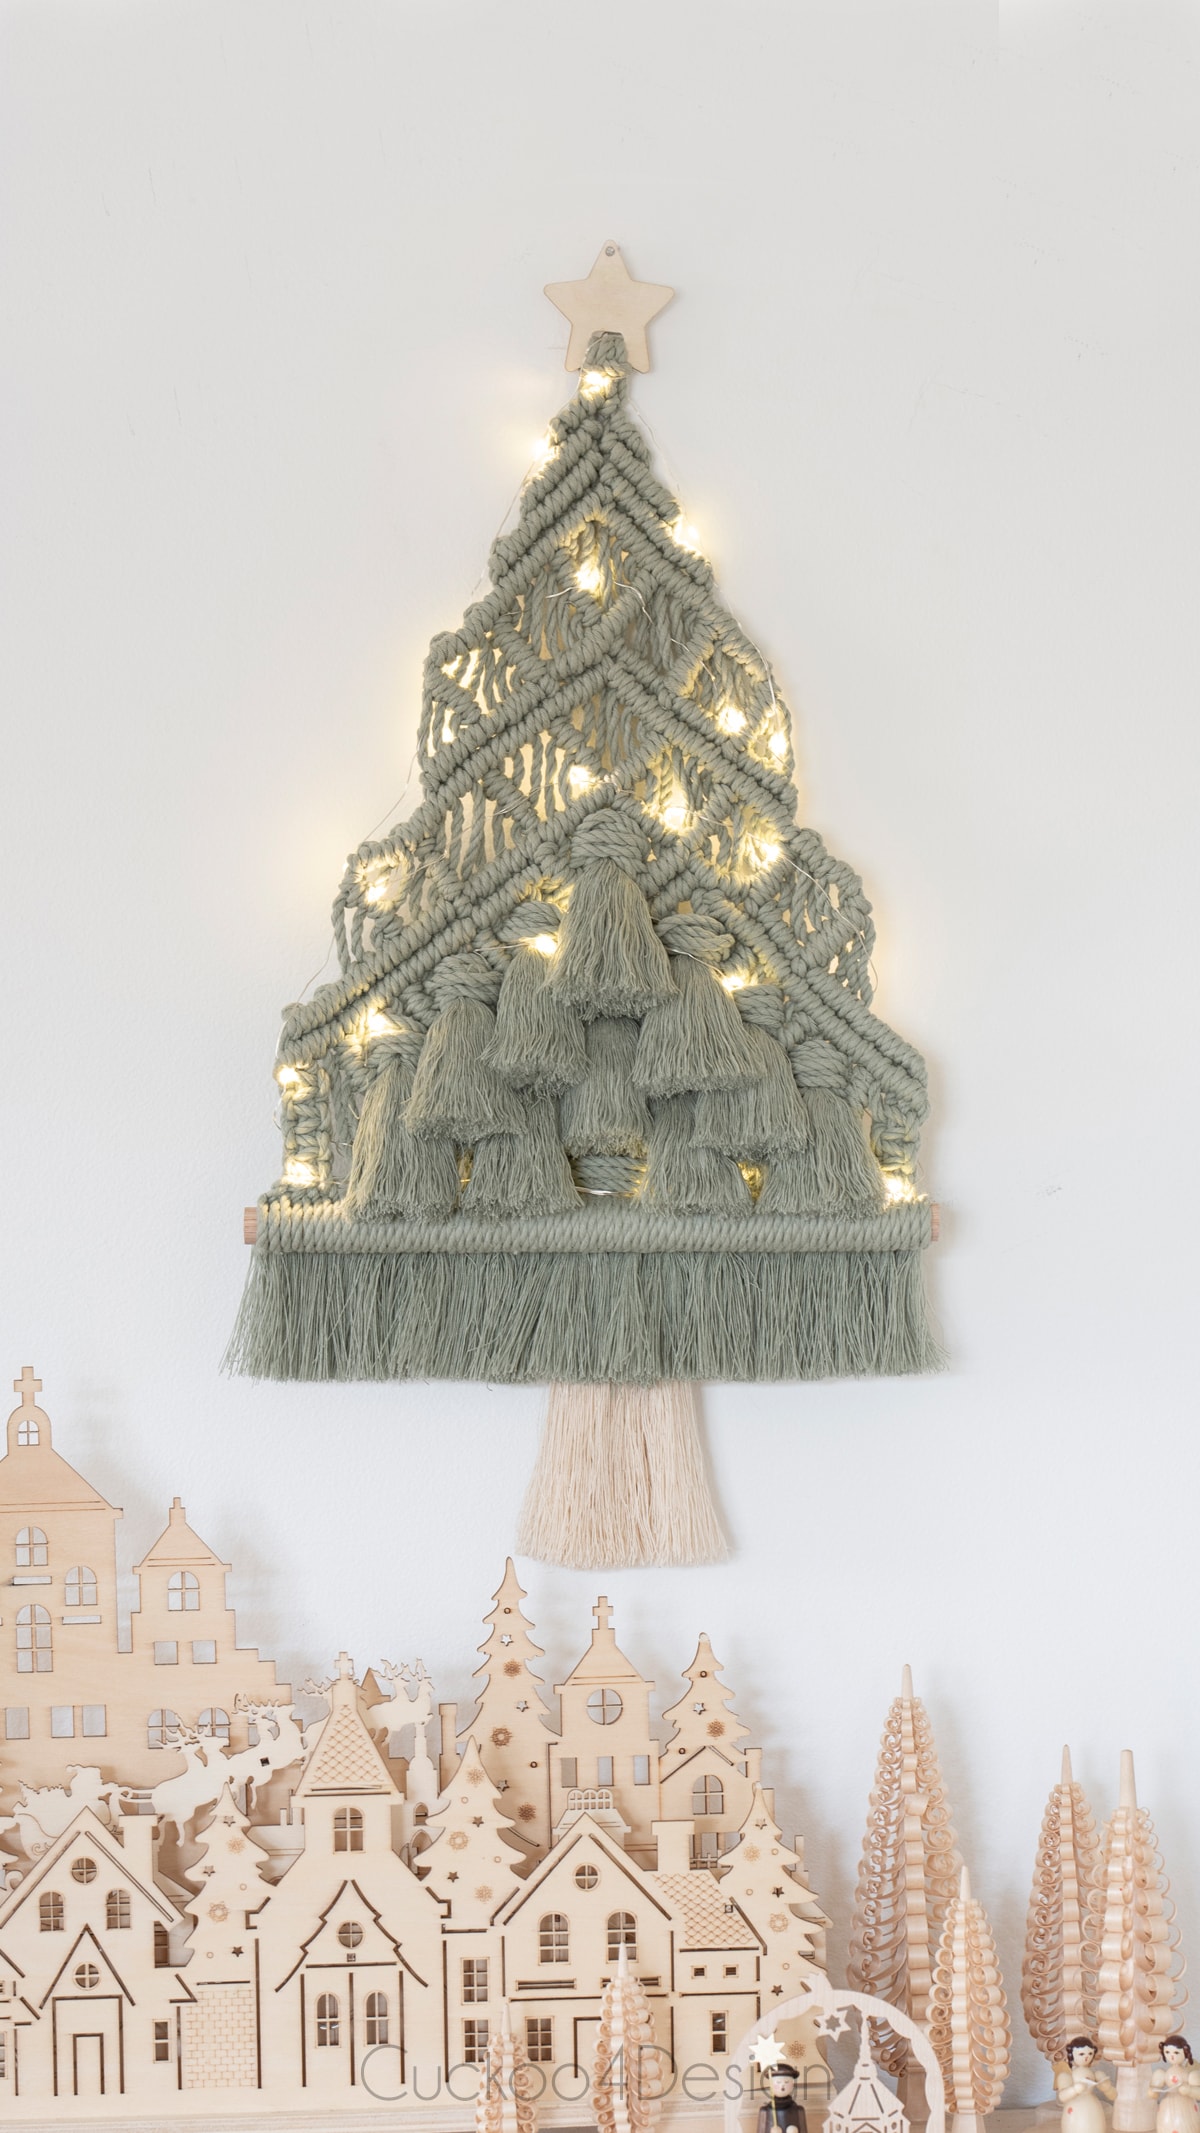 macrame Christmas tree above wooden Christmas village